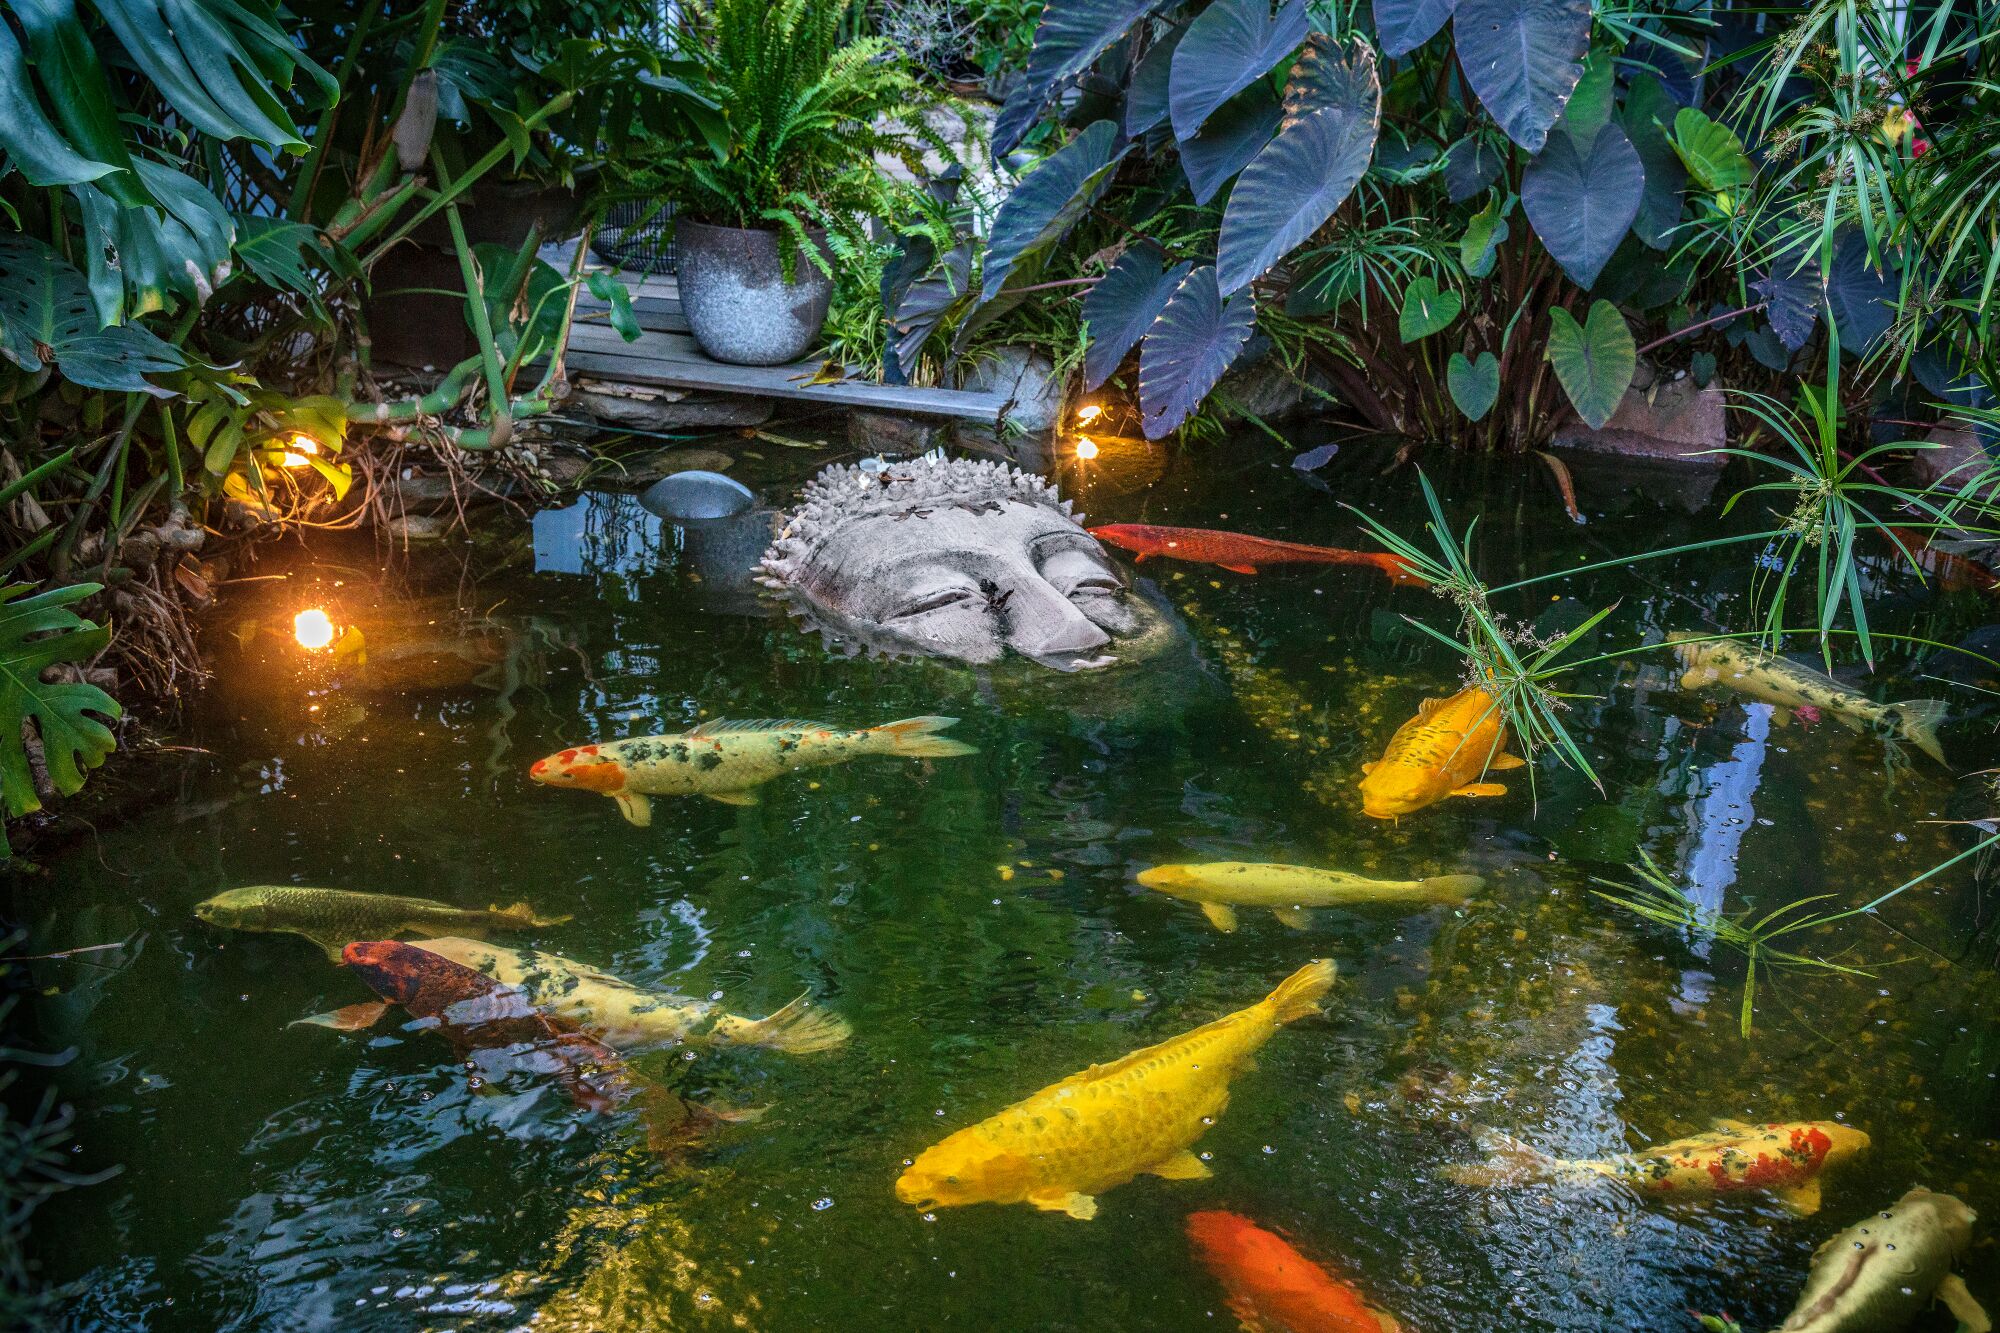 Koi swim in a pond around a submerged Buddha head